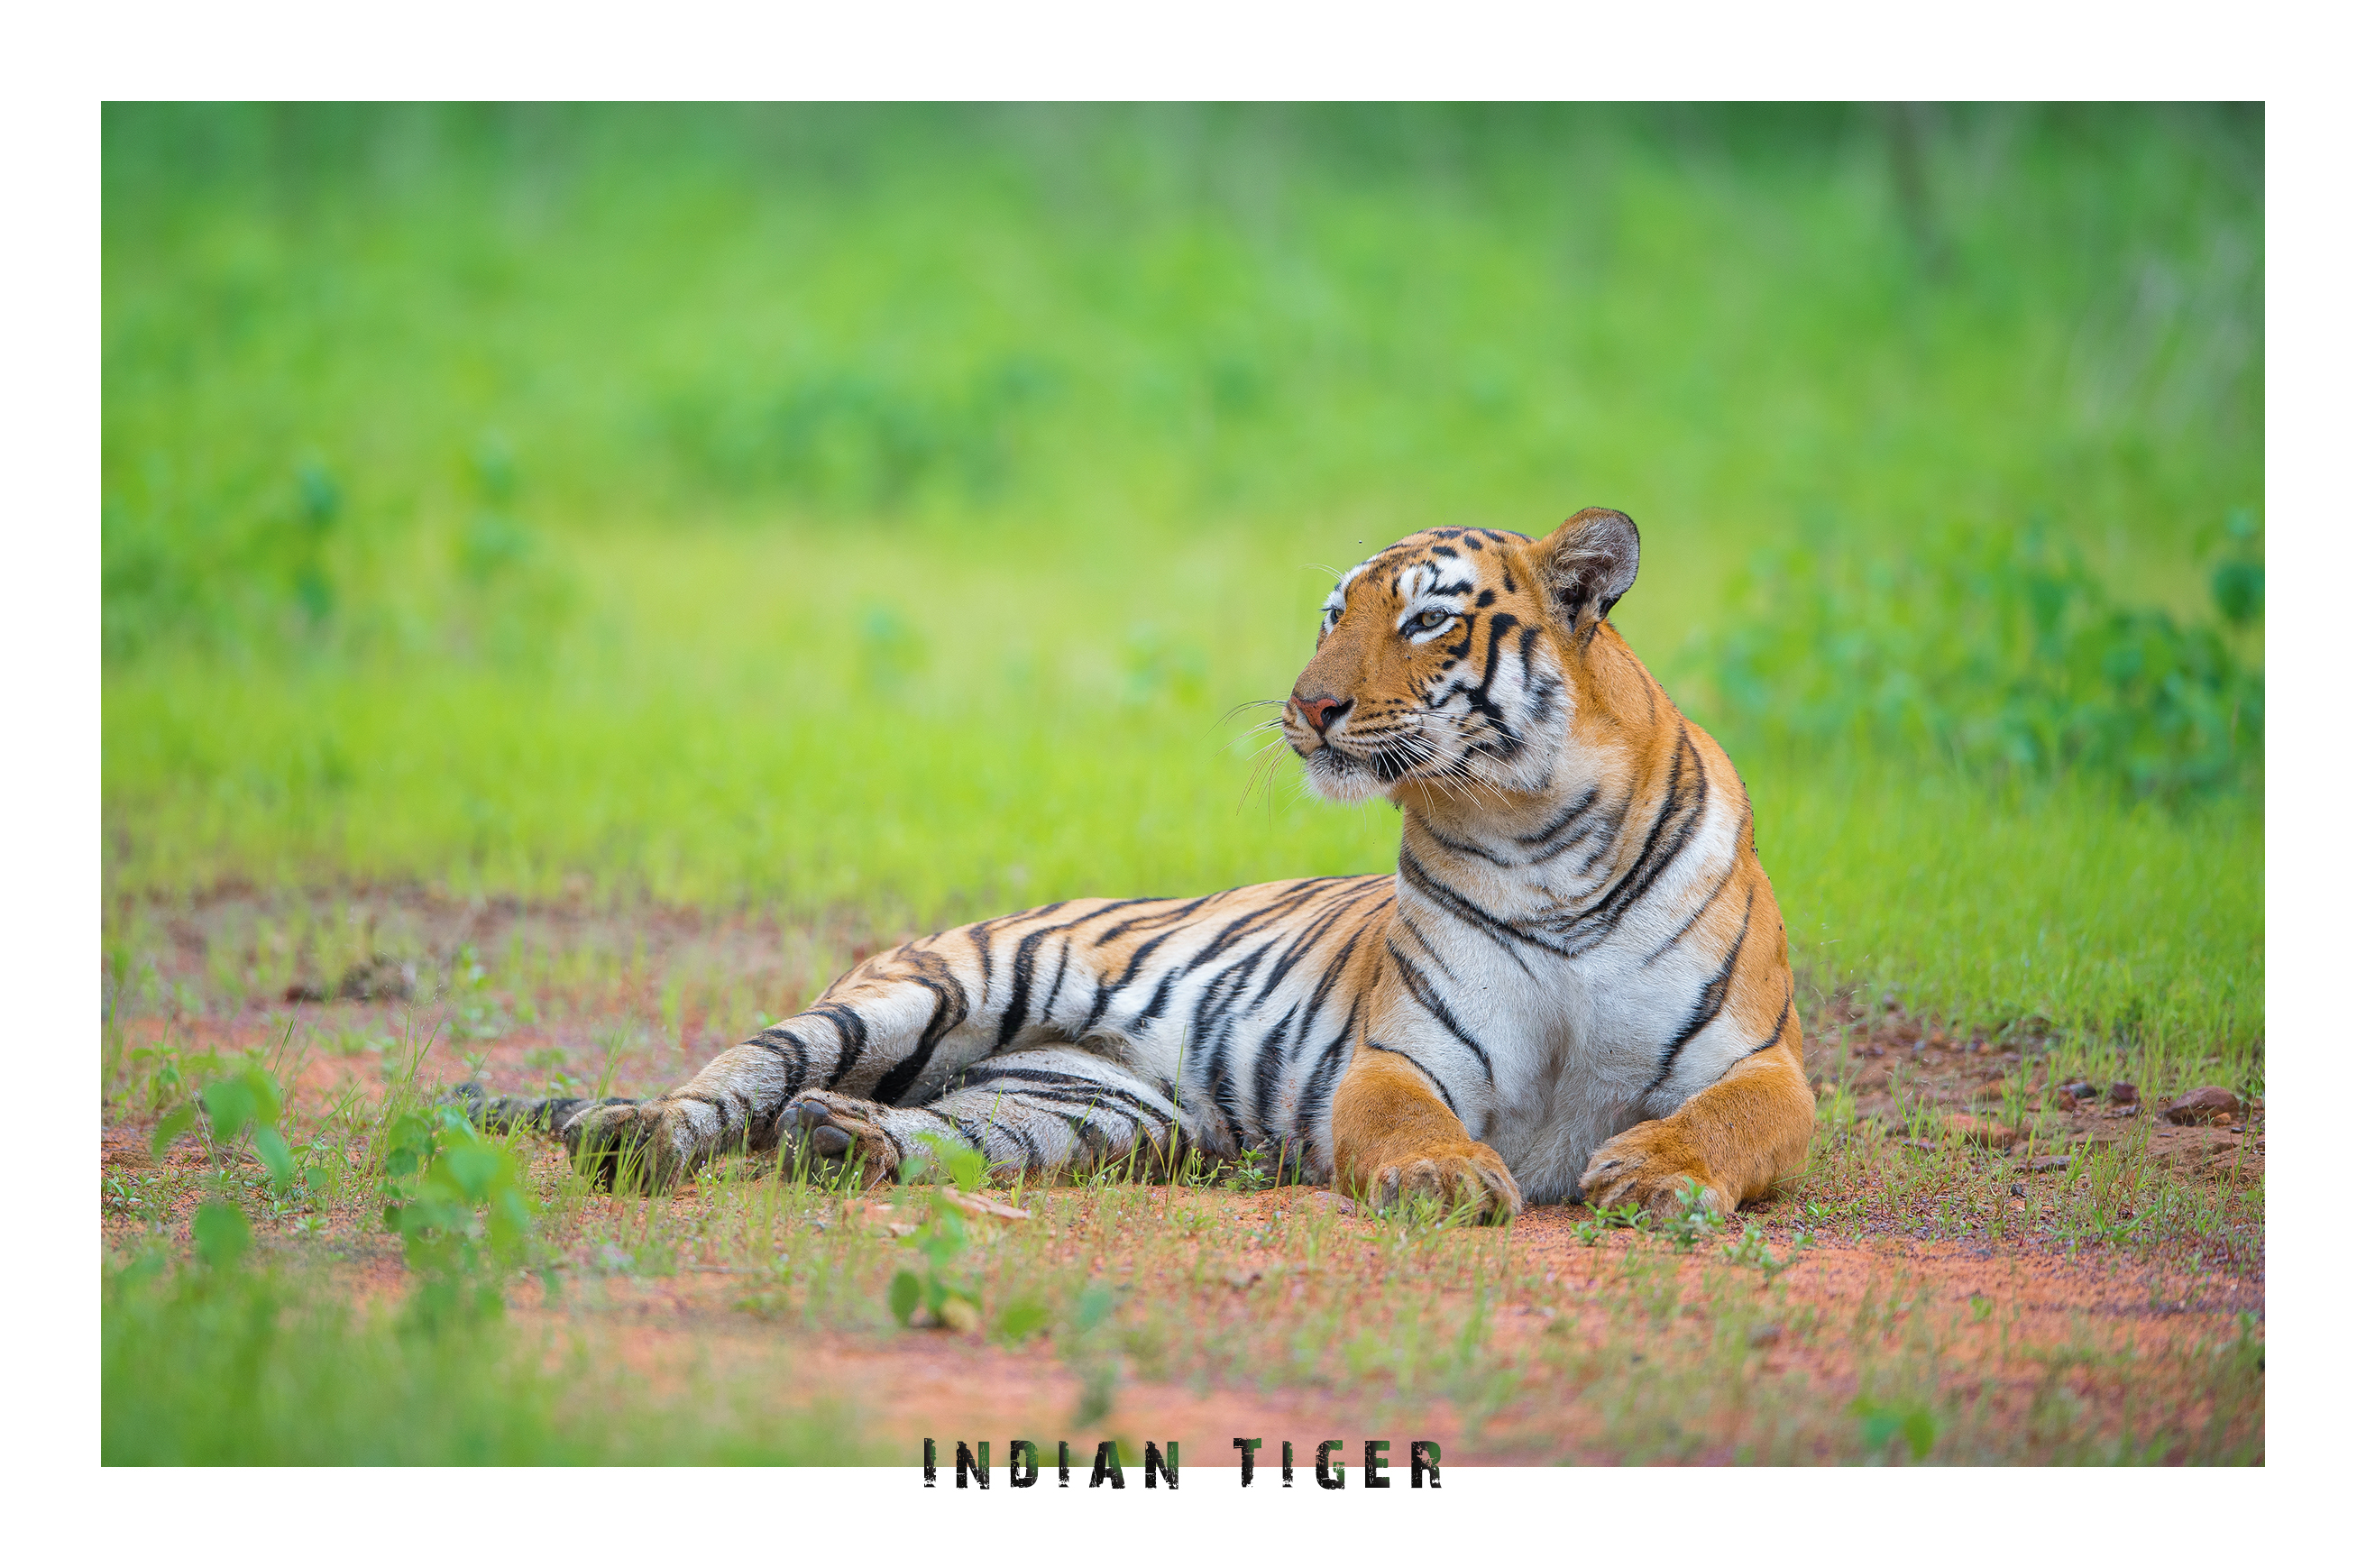 Tiger and Habitat Dilemma